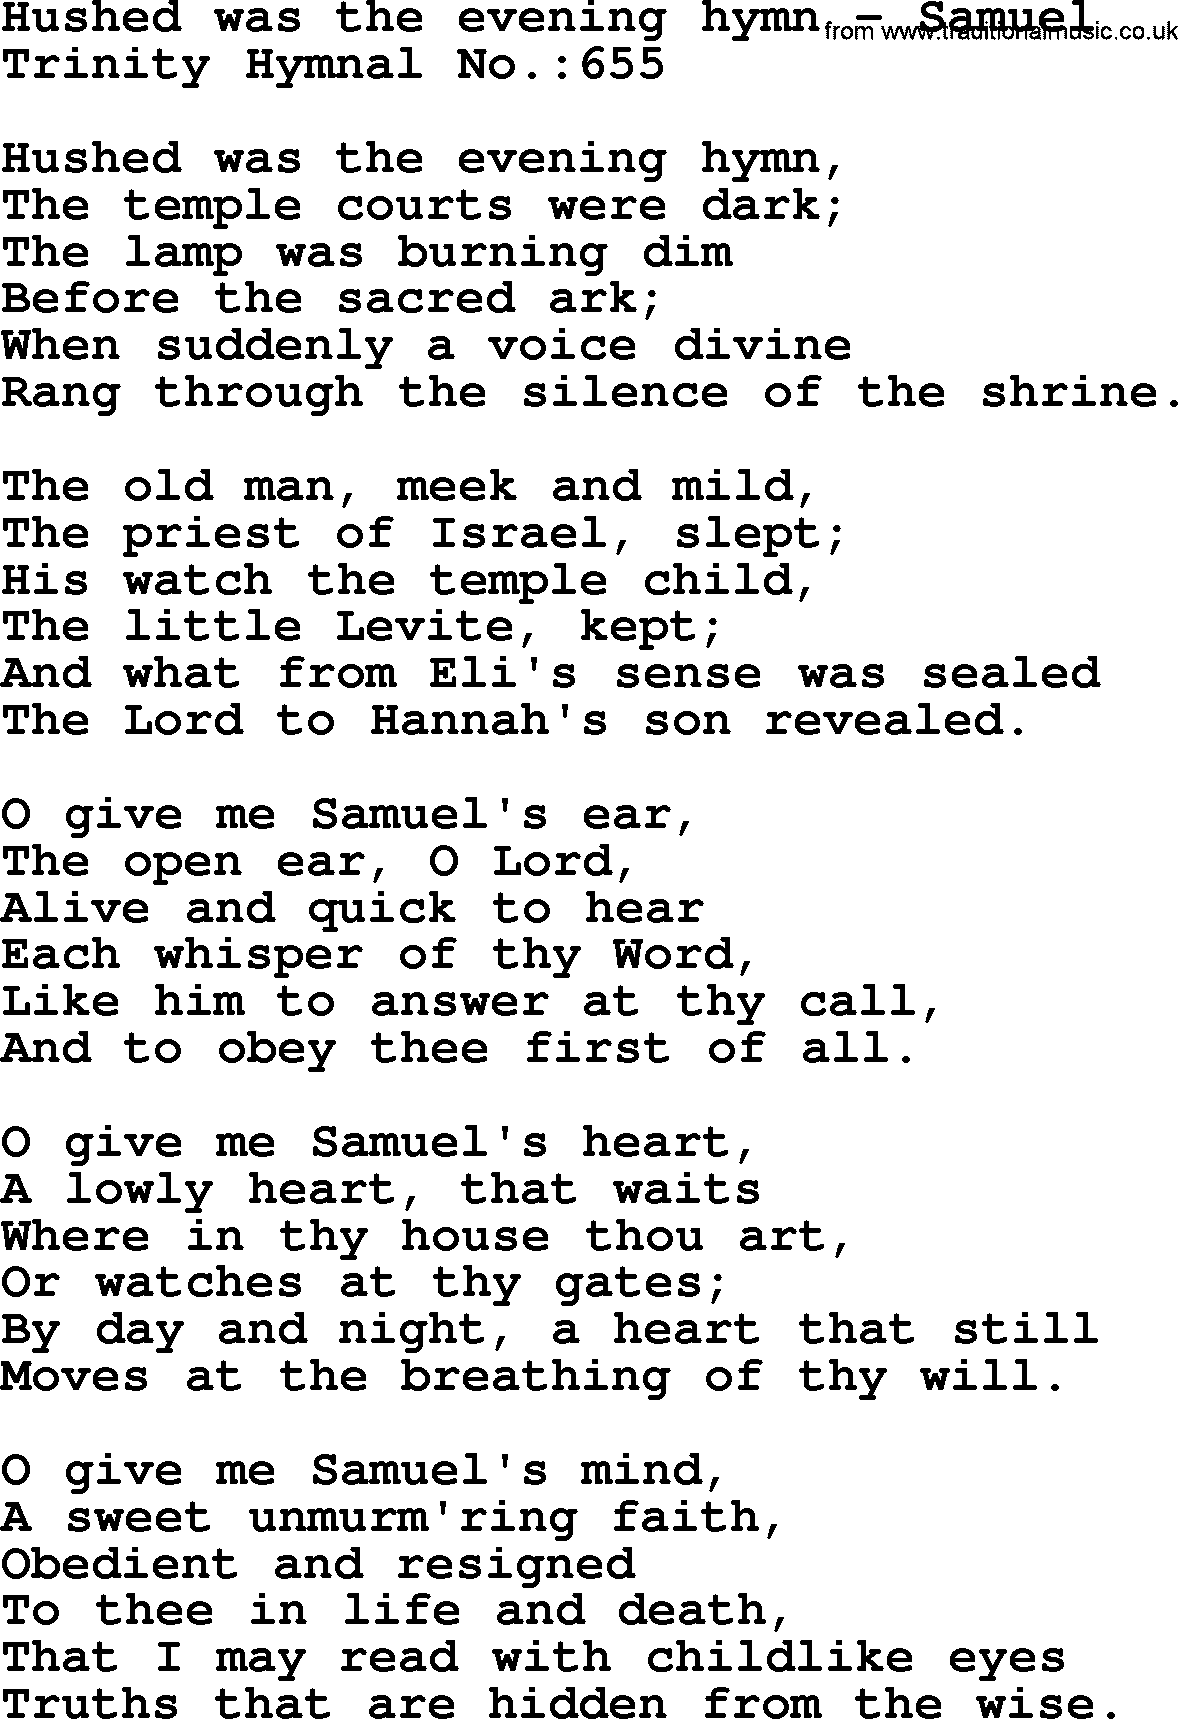 Trinity Hymnal Hymn: Hushed Was The Evening Hymn--Samuel, lyrics with midi music